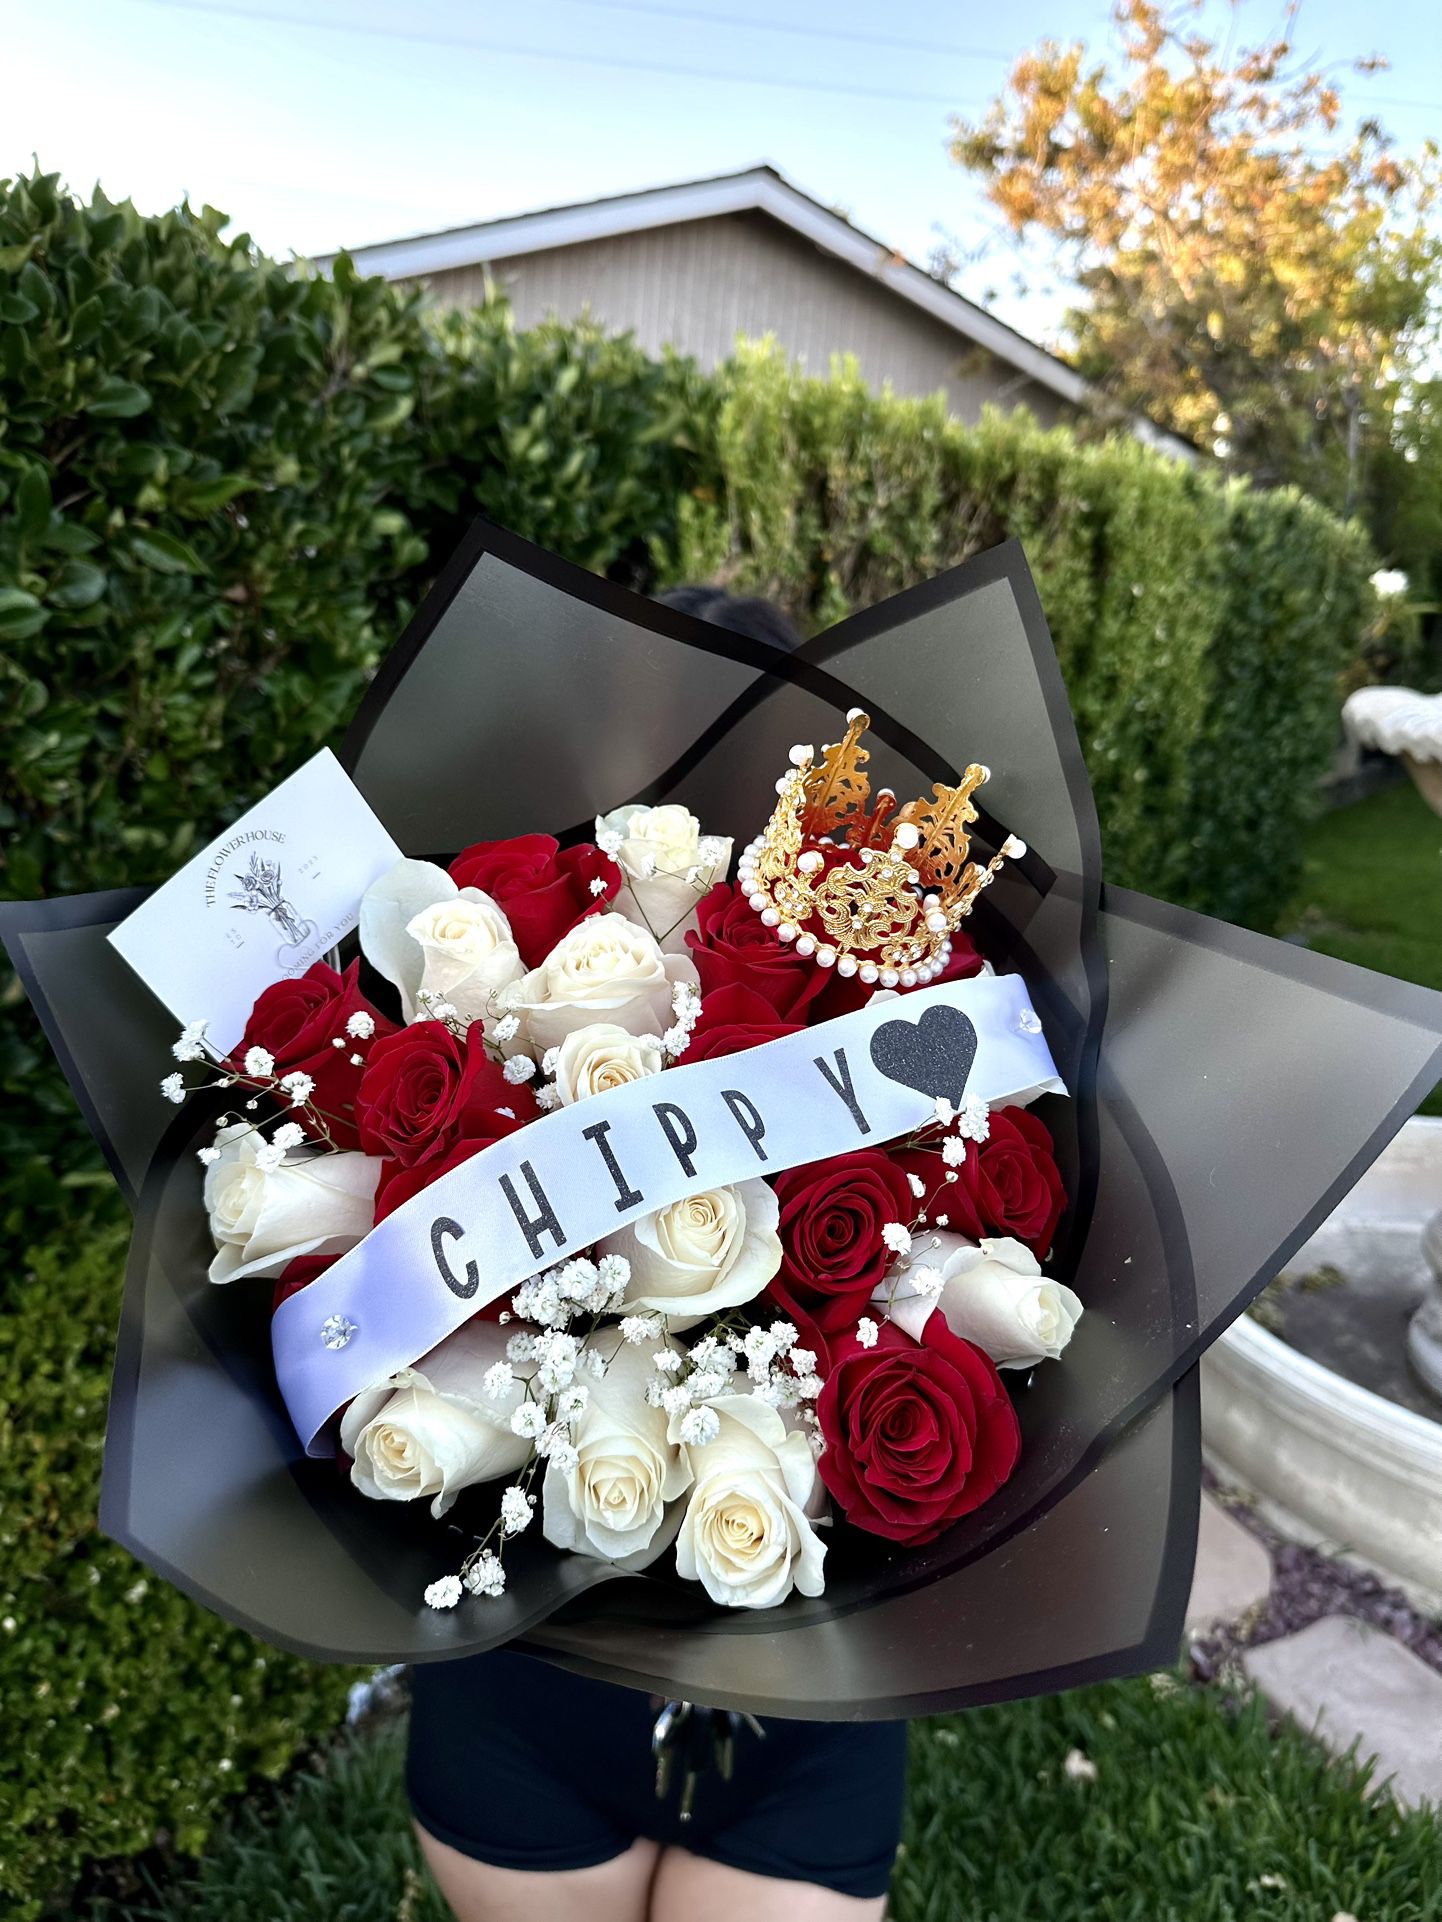 LV wrapping Paper | Flower Arrangement | bouquets | Ramo De Flores | Flower  Bouquets for Sale in Phillips Ranch, CA - OfferUp